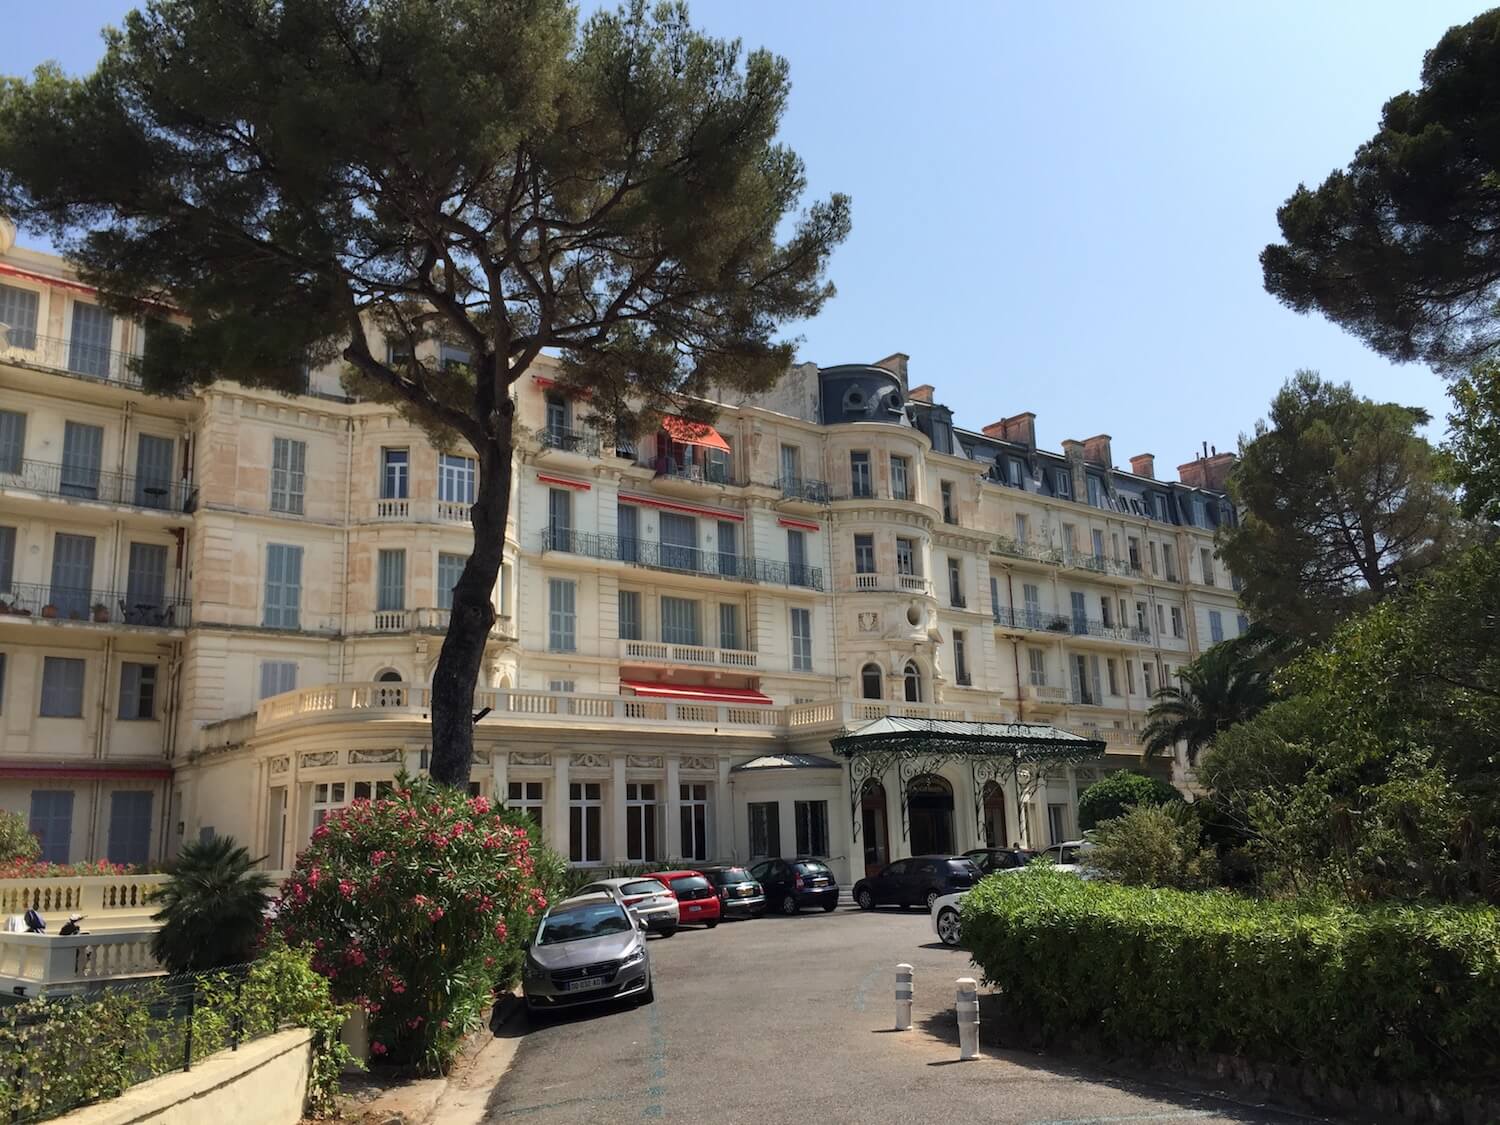 Grand Hotel Cap Ferrat